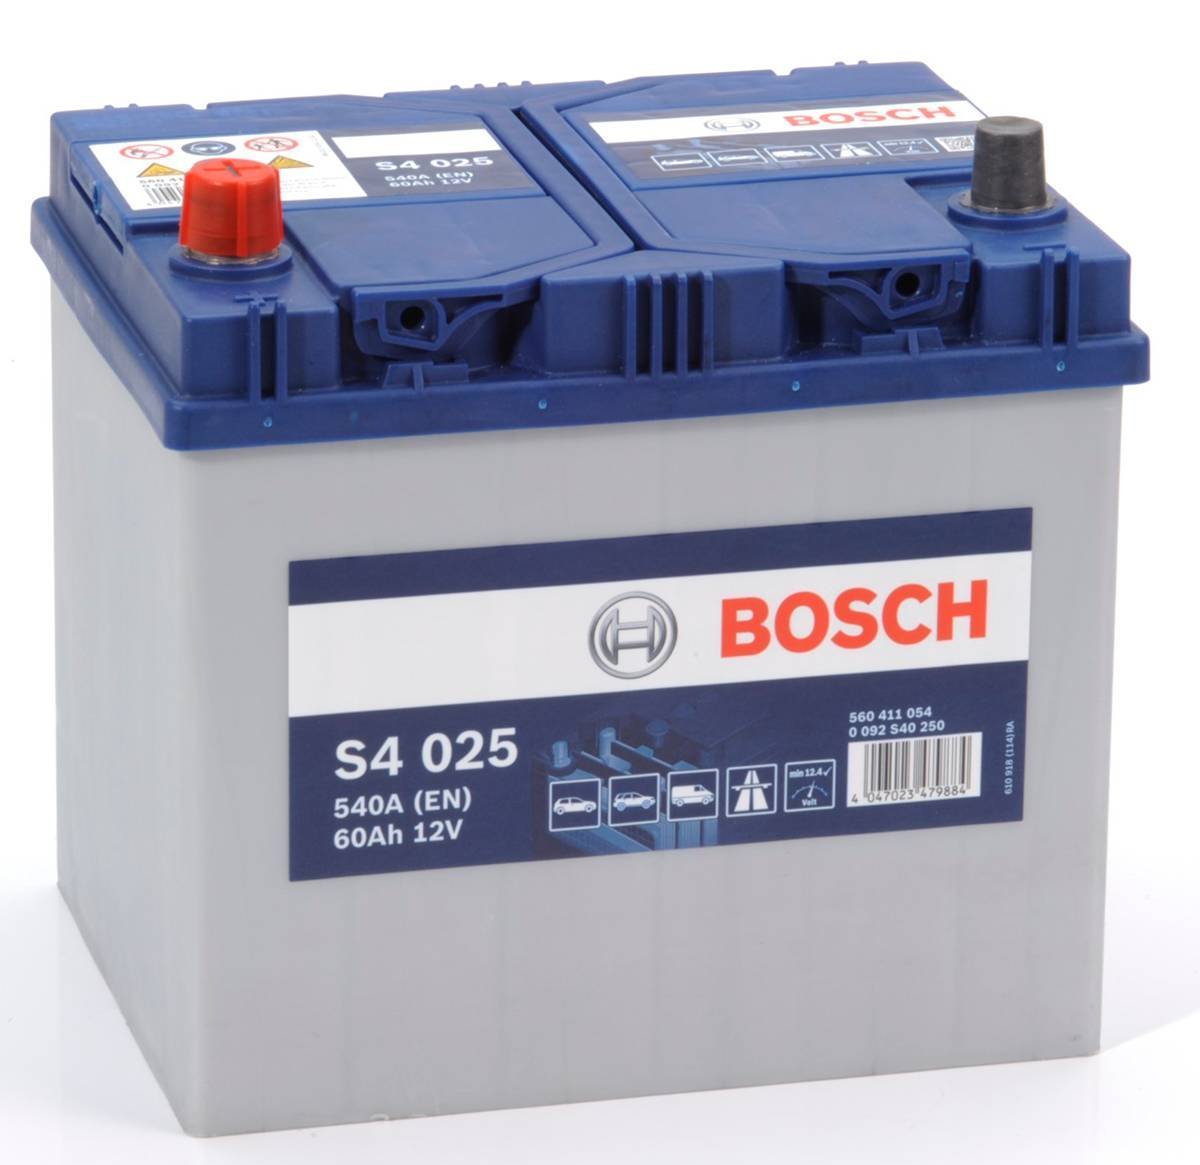 0092S40250 Bosch Silver S4 025 60 Ah Amp Car Battery EN 540A 12V Ready to  Use